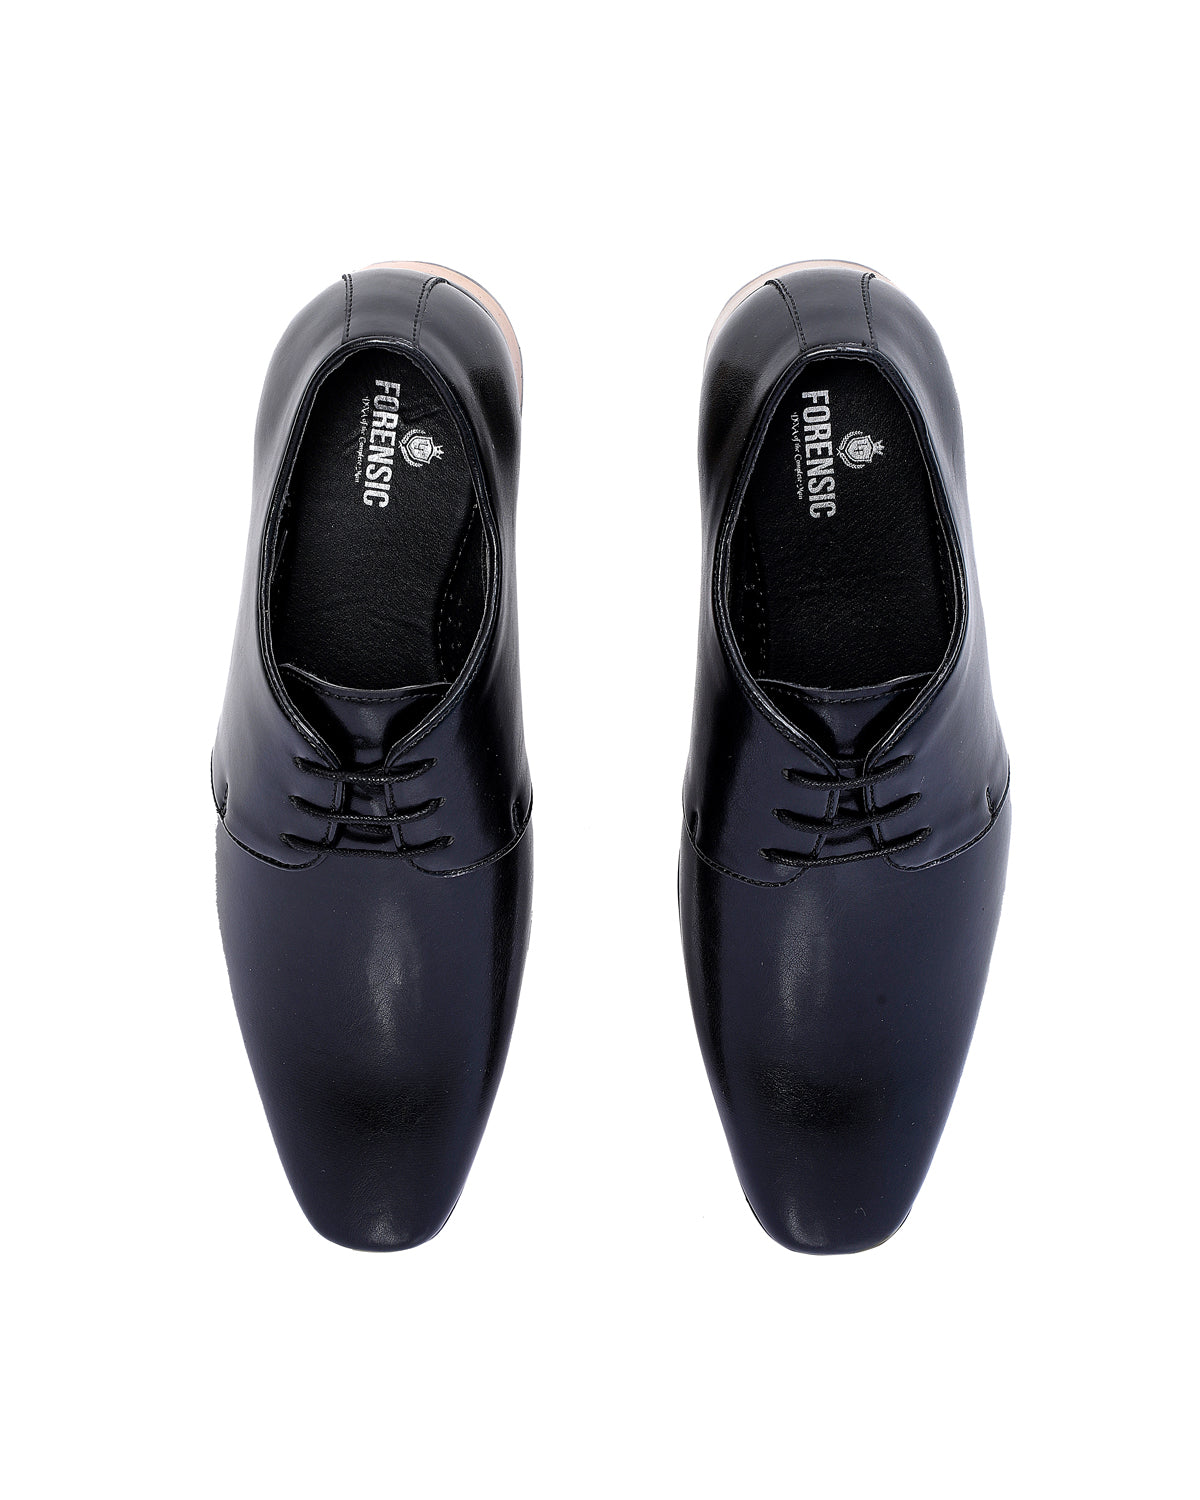 Men's Solid Black Derby Shoes